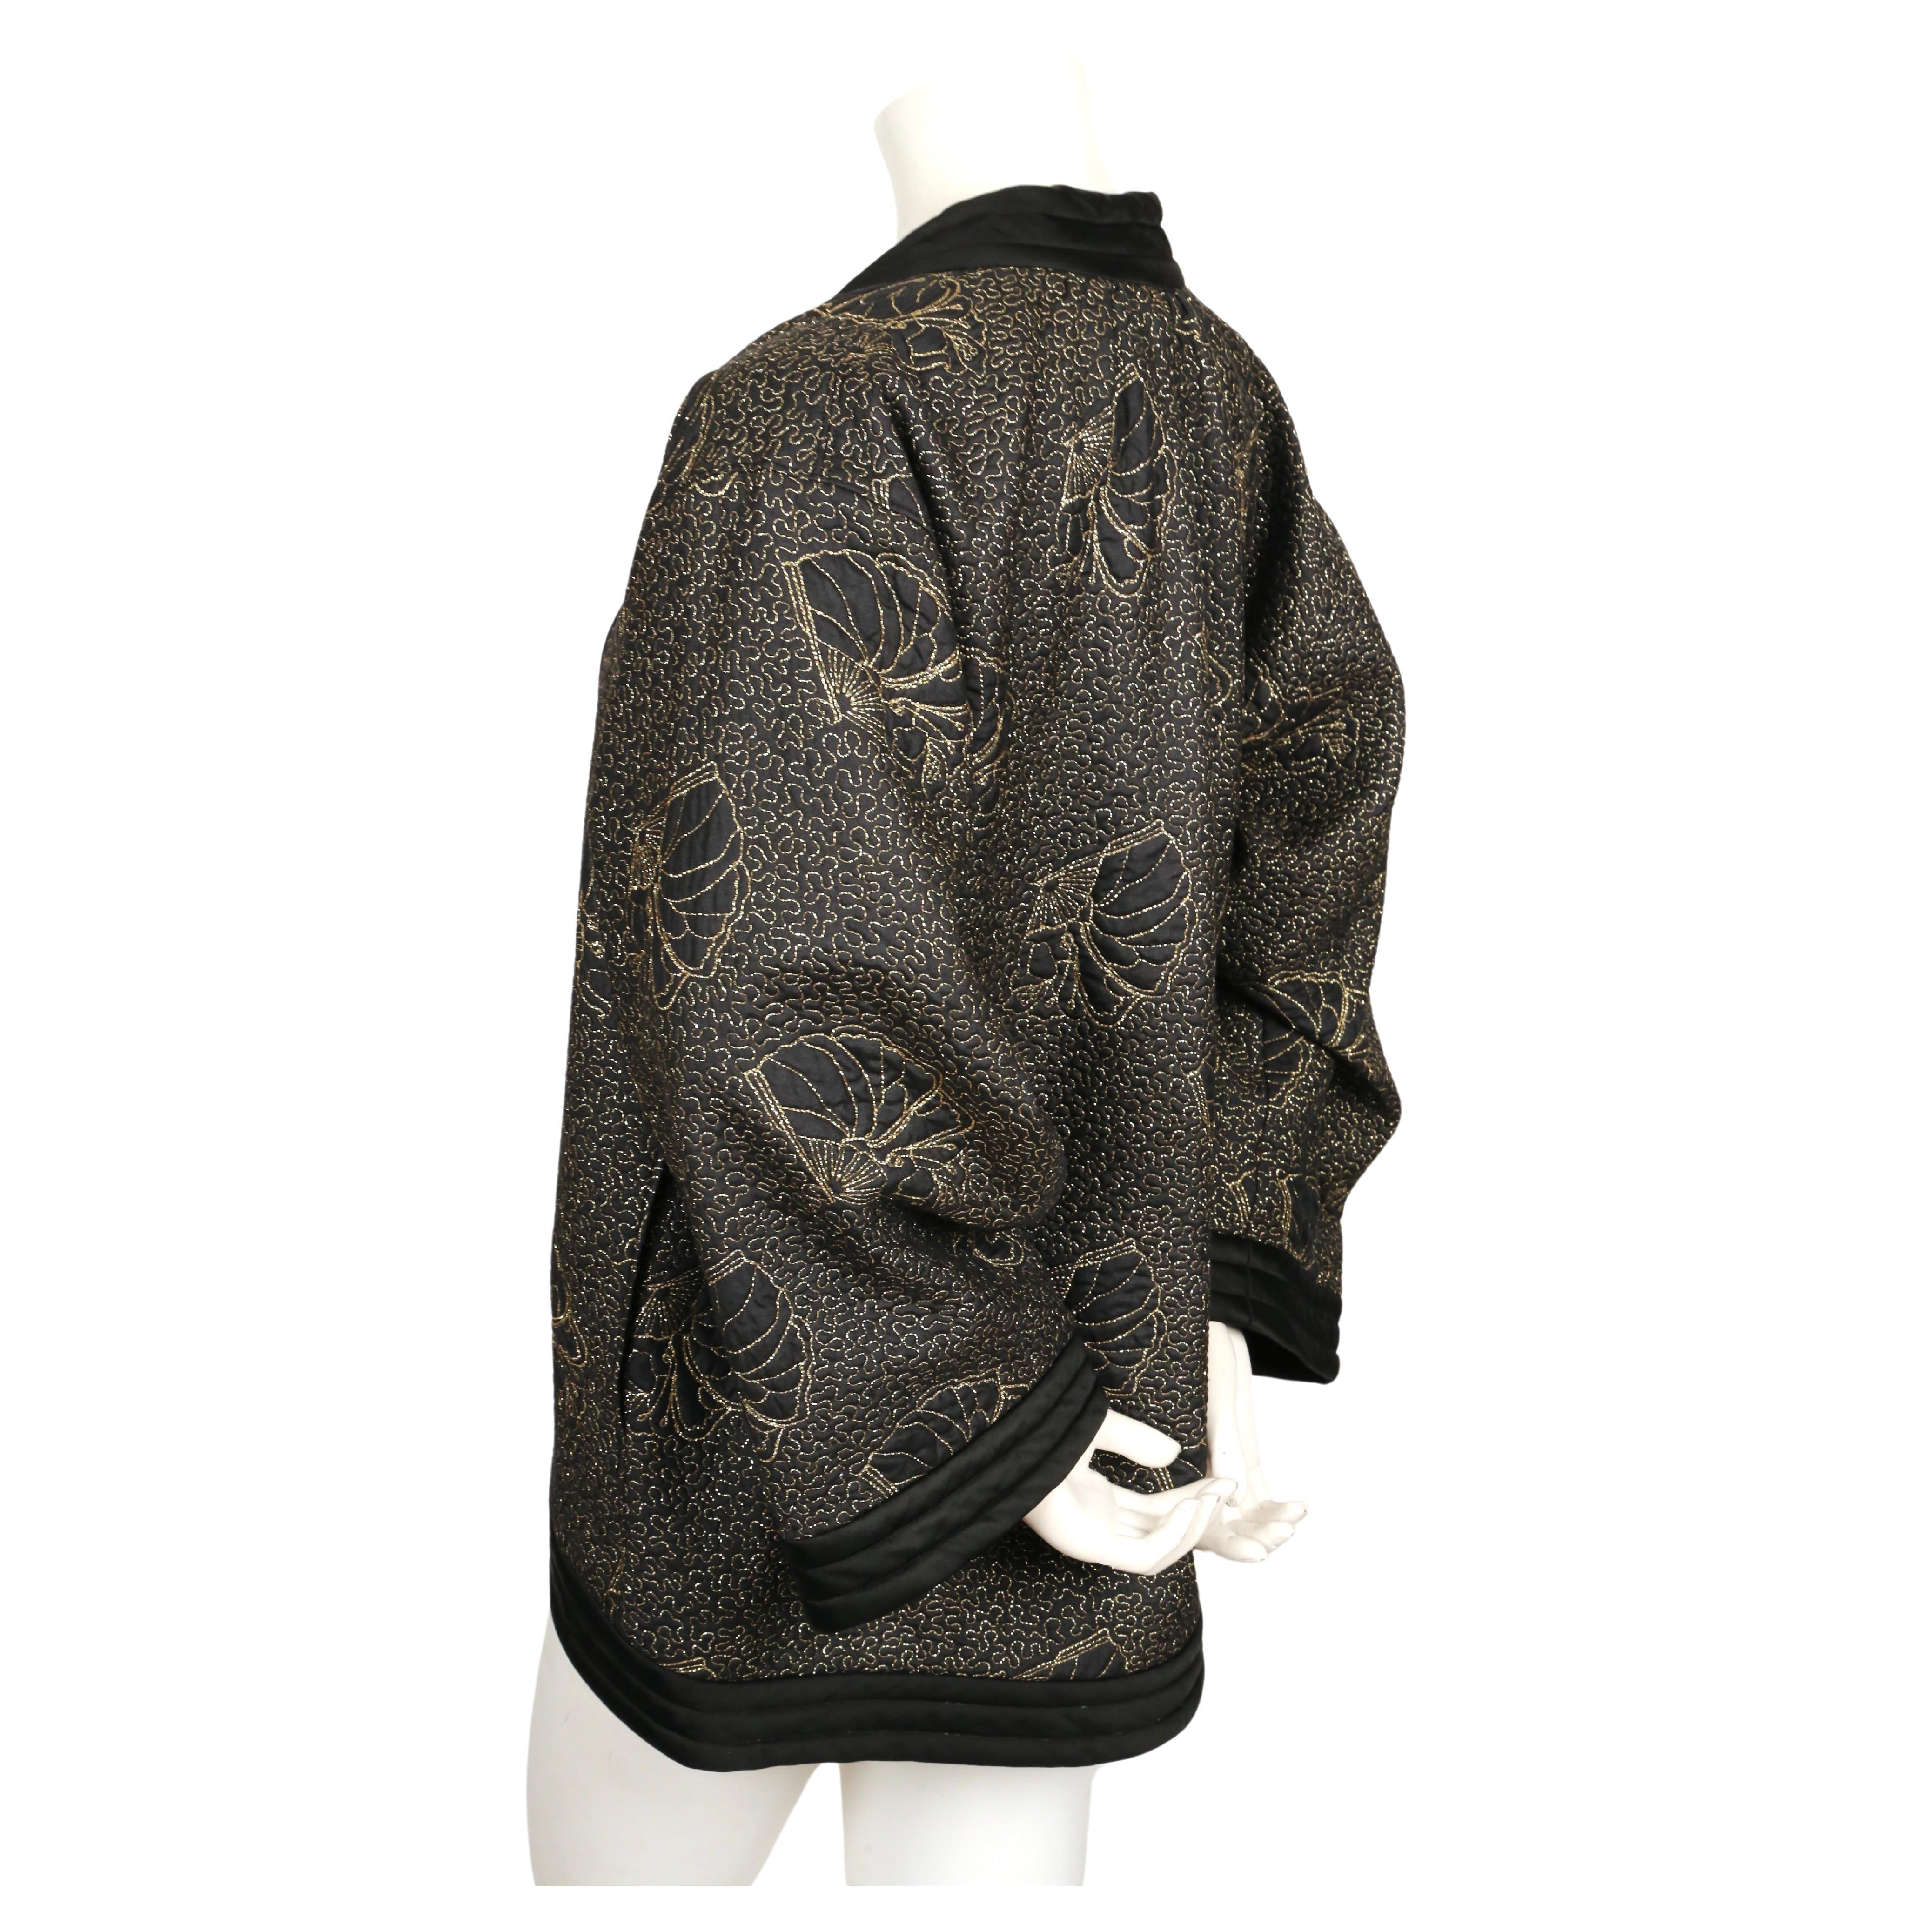 1979 YVES SAINT LAURENT black satin kimono jacket with gold seashell embroidery For Sale 1